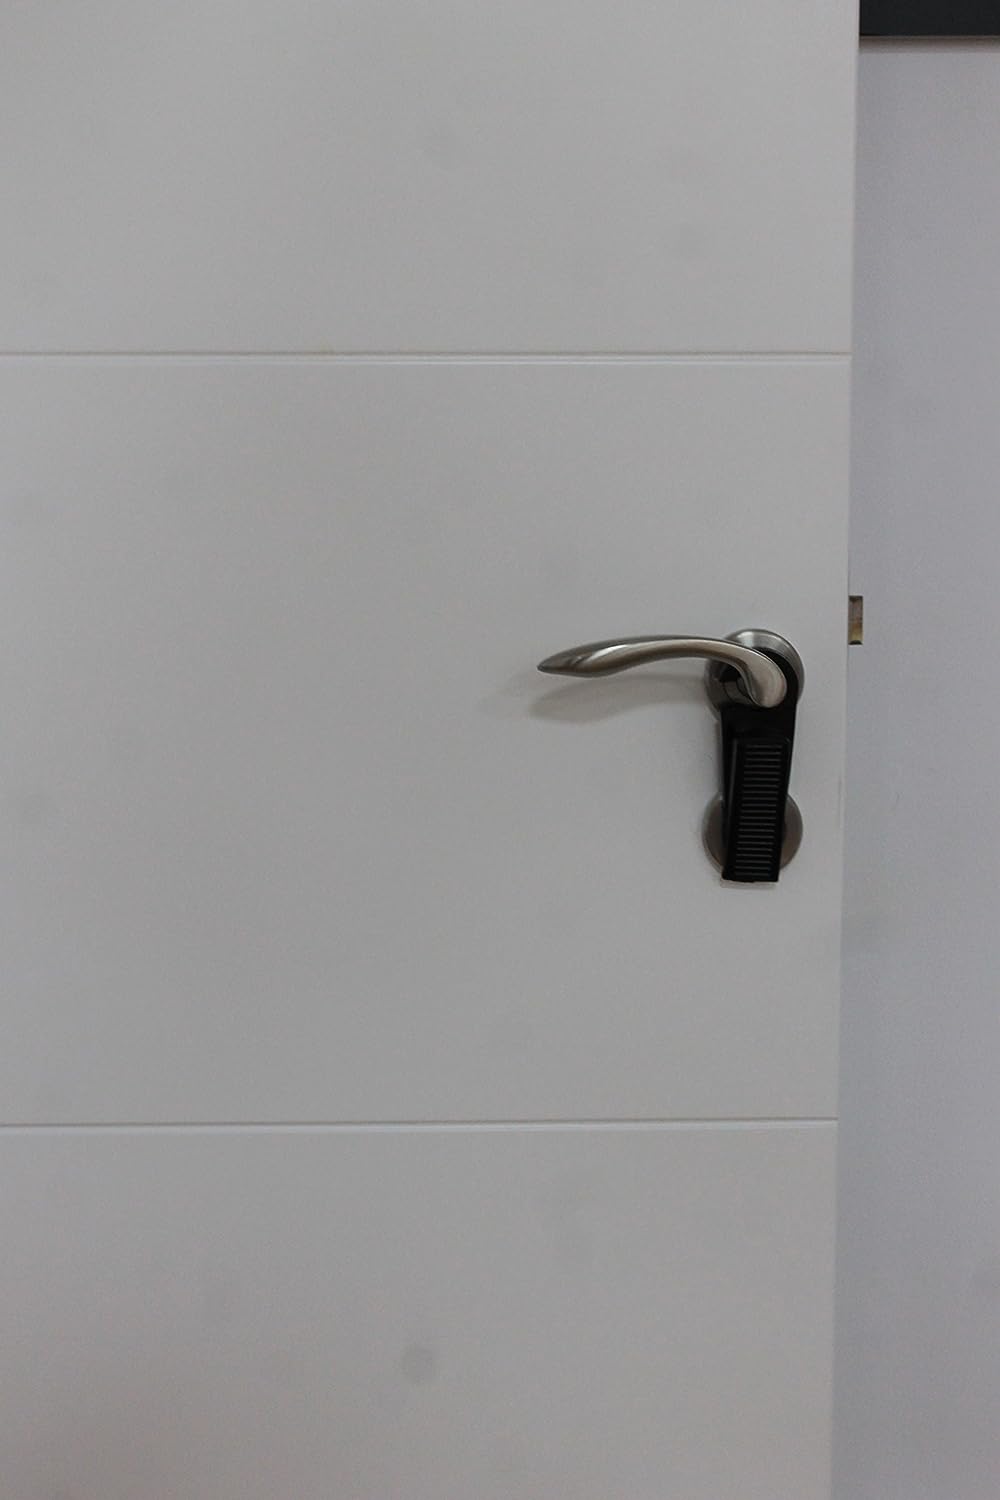 Fackelmann Door Stopper With Hook, Rubber, 128X40X27 mm, Black (Set Of 2)